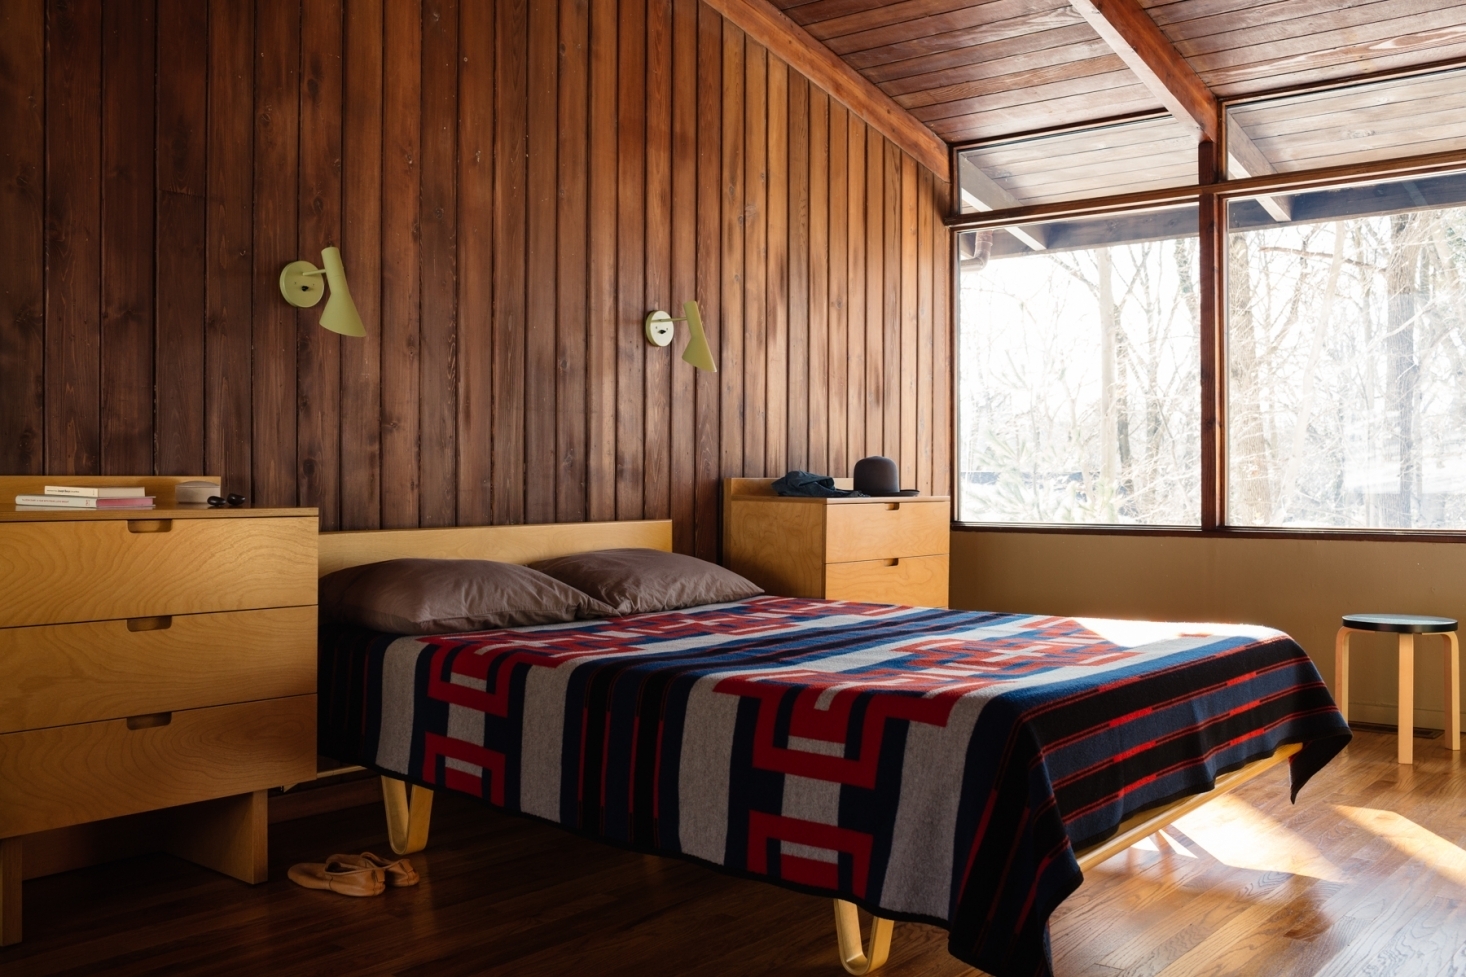 Mid Century Modern Wood Bed